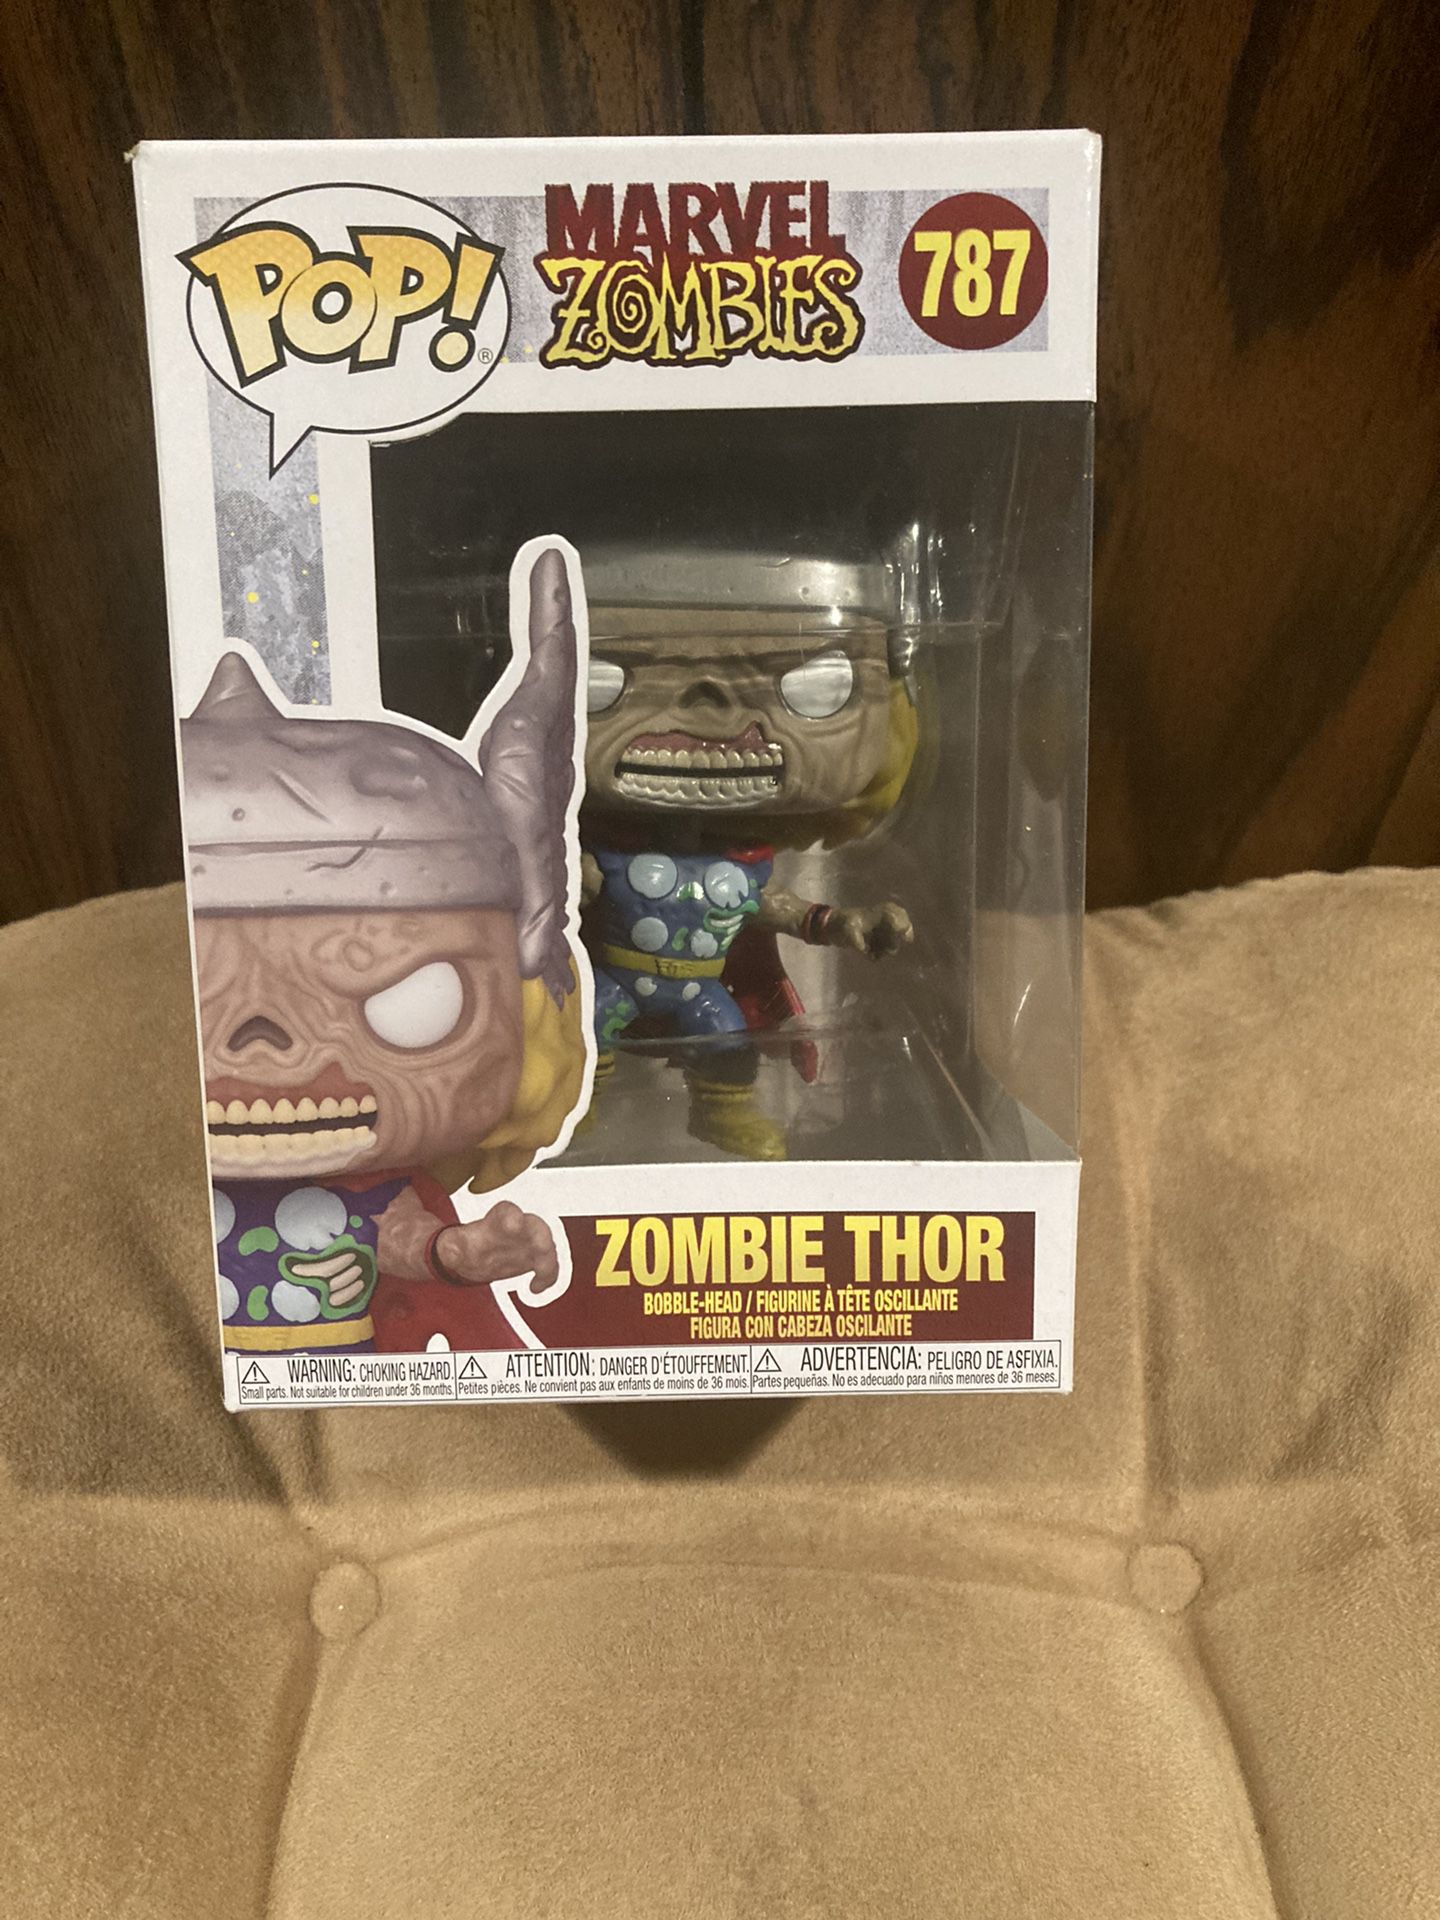 Zombie Thor Funk Pop. Brand New In Box!! 